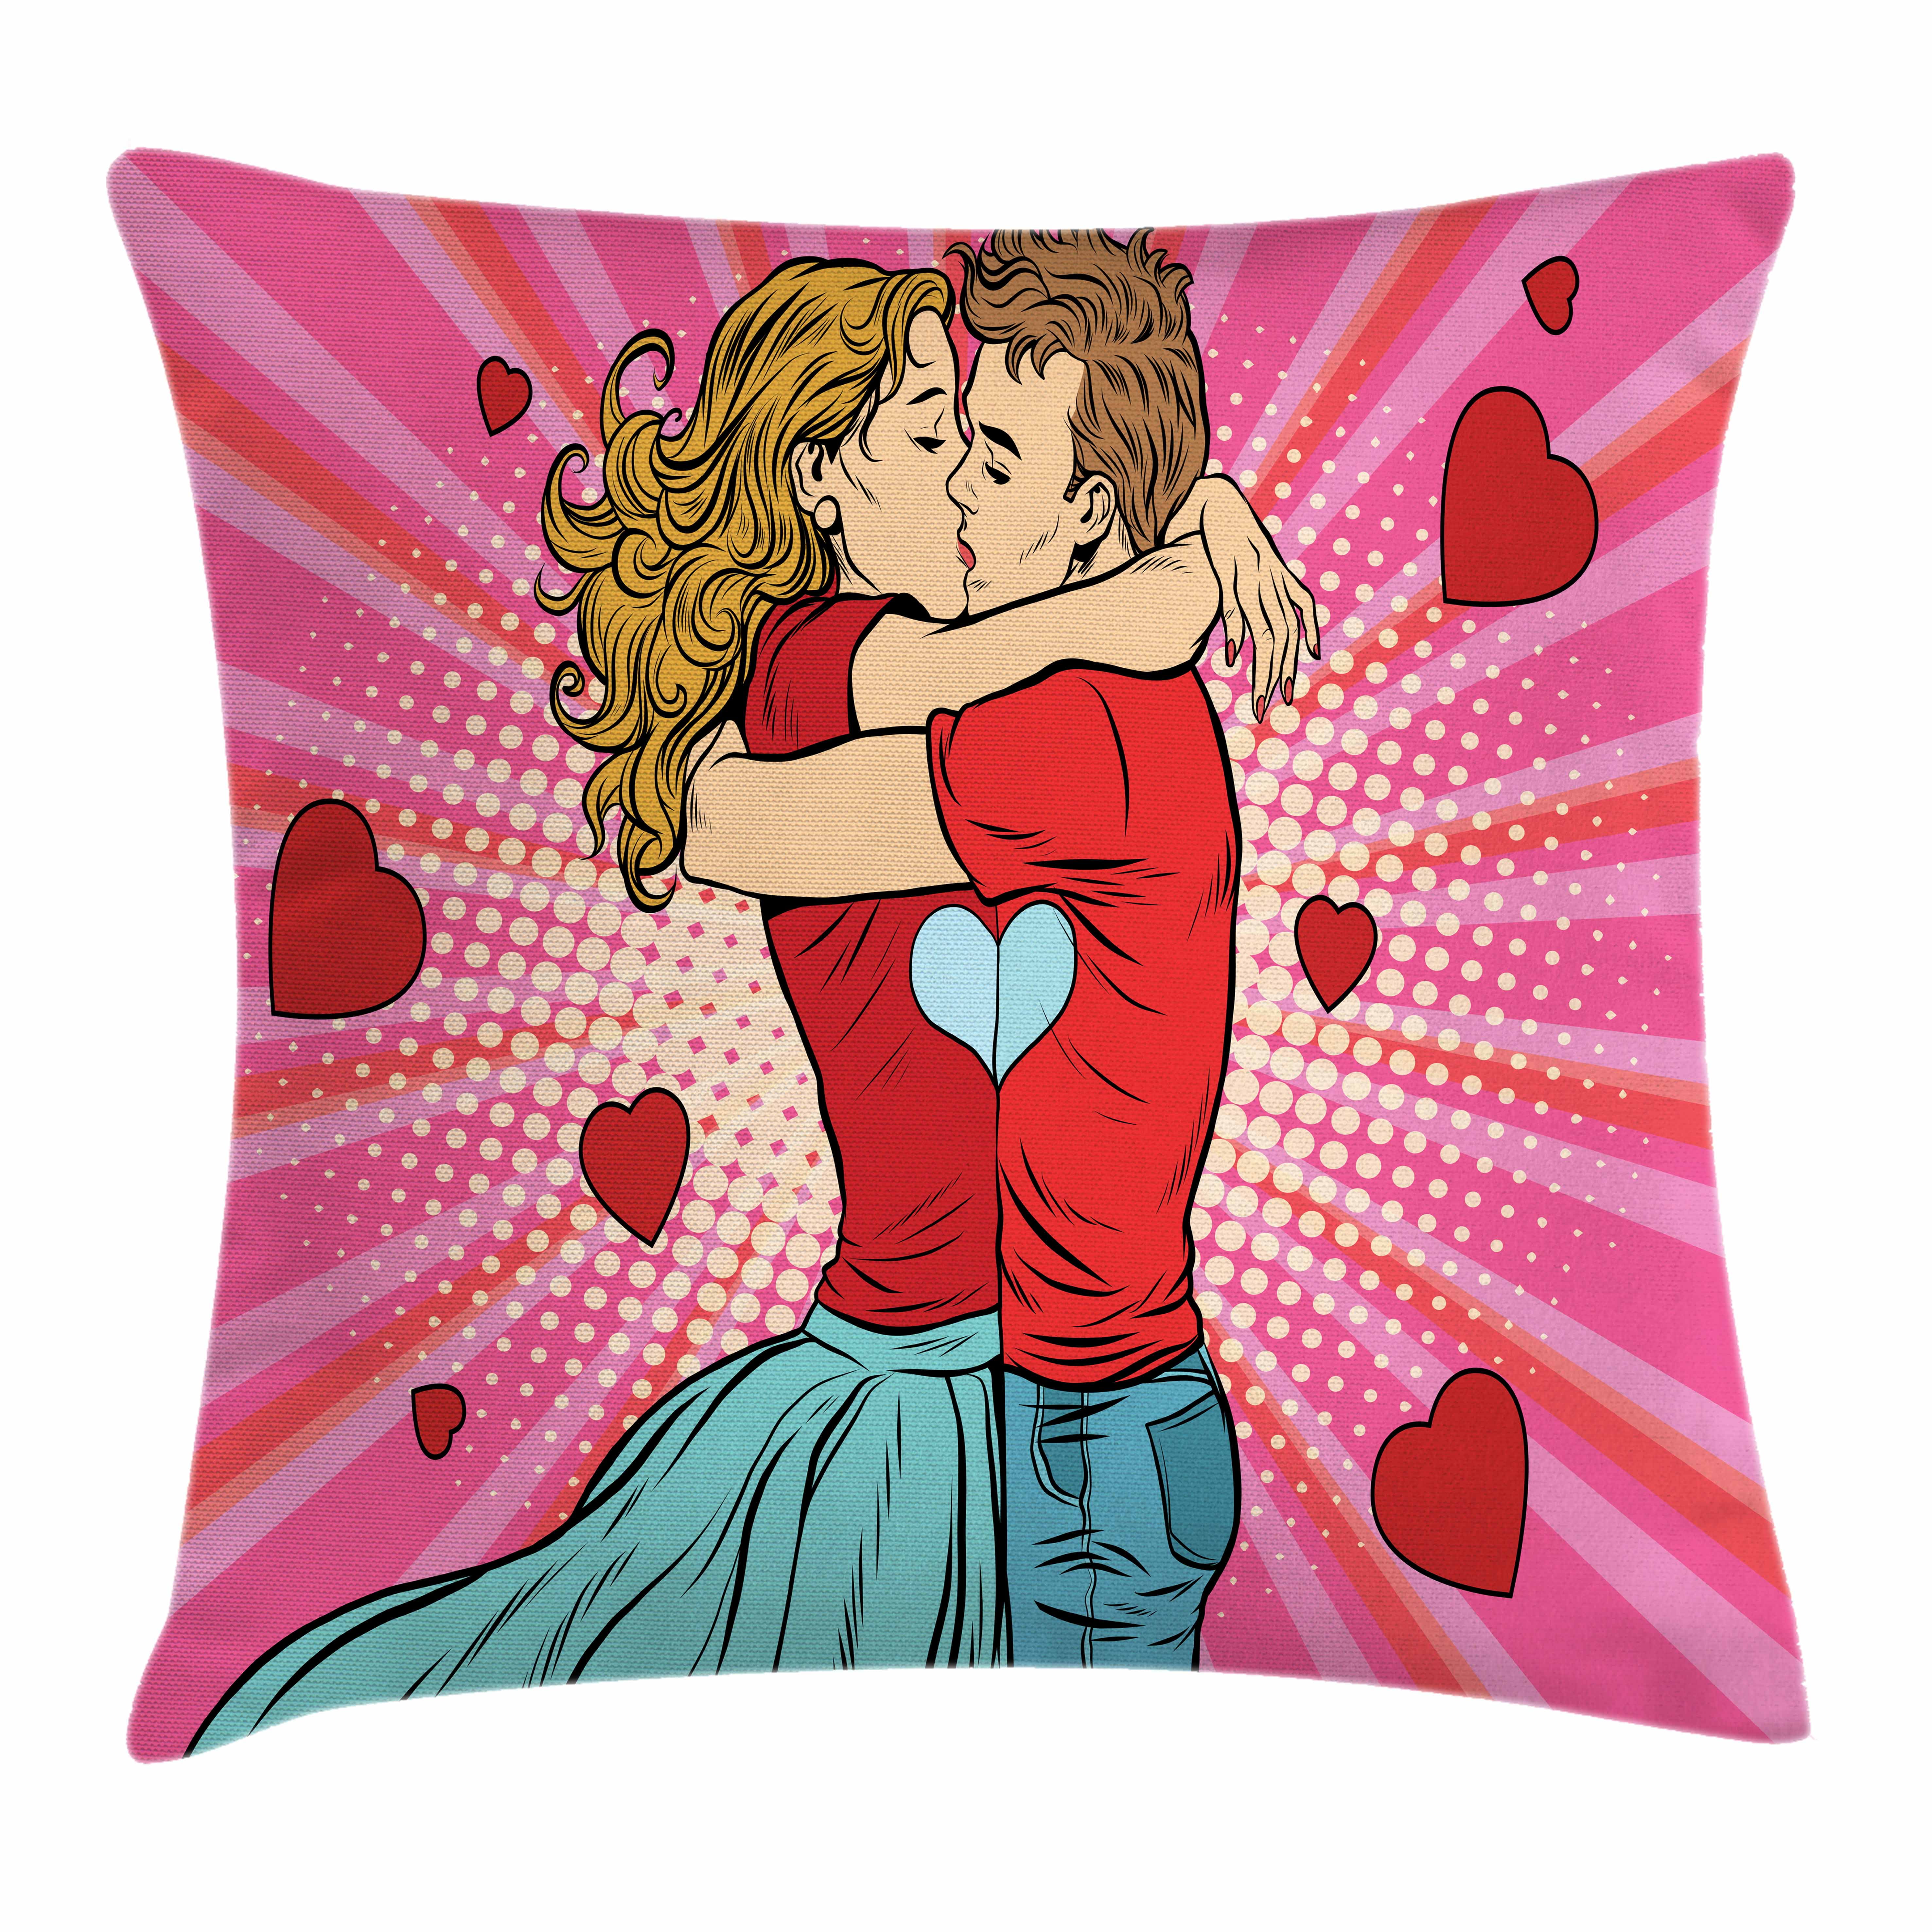 Boyfriend Throw Pillow Cushion Cover Pop Art Style Image Couple